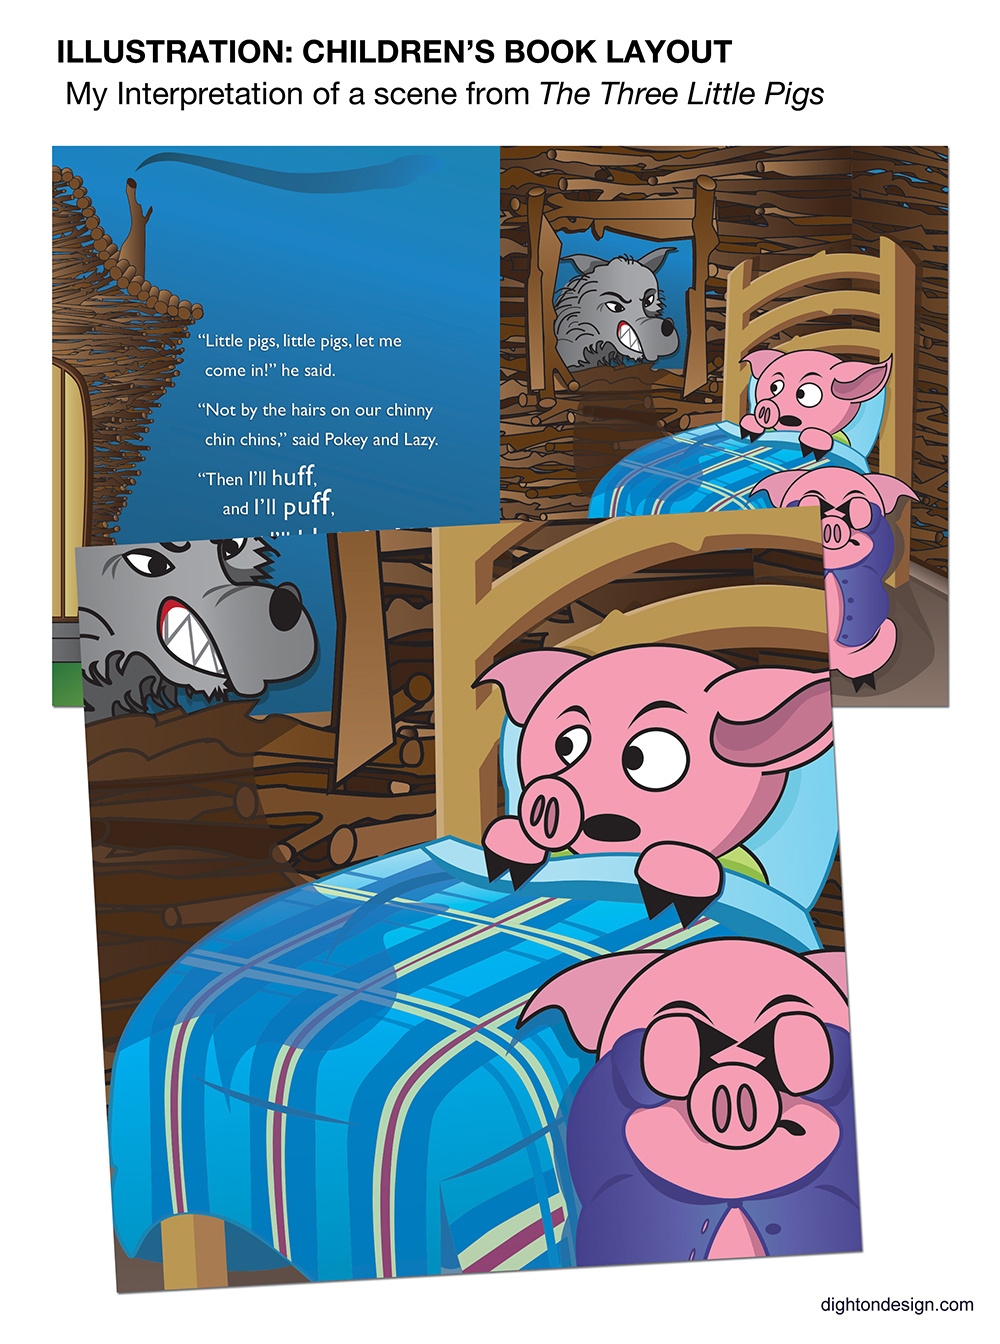 illustration children's book Book Layout children's story Three Little Pigs